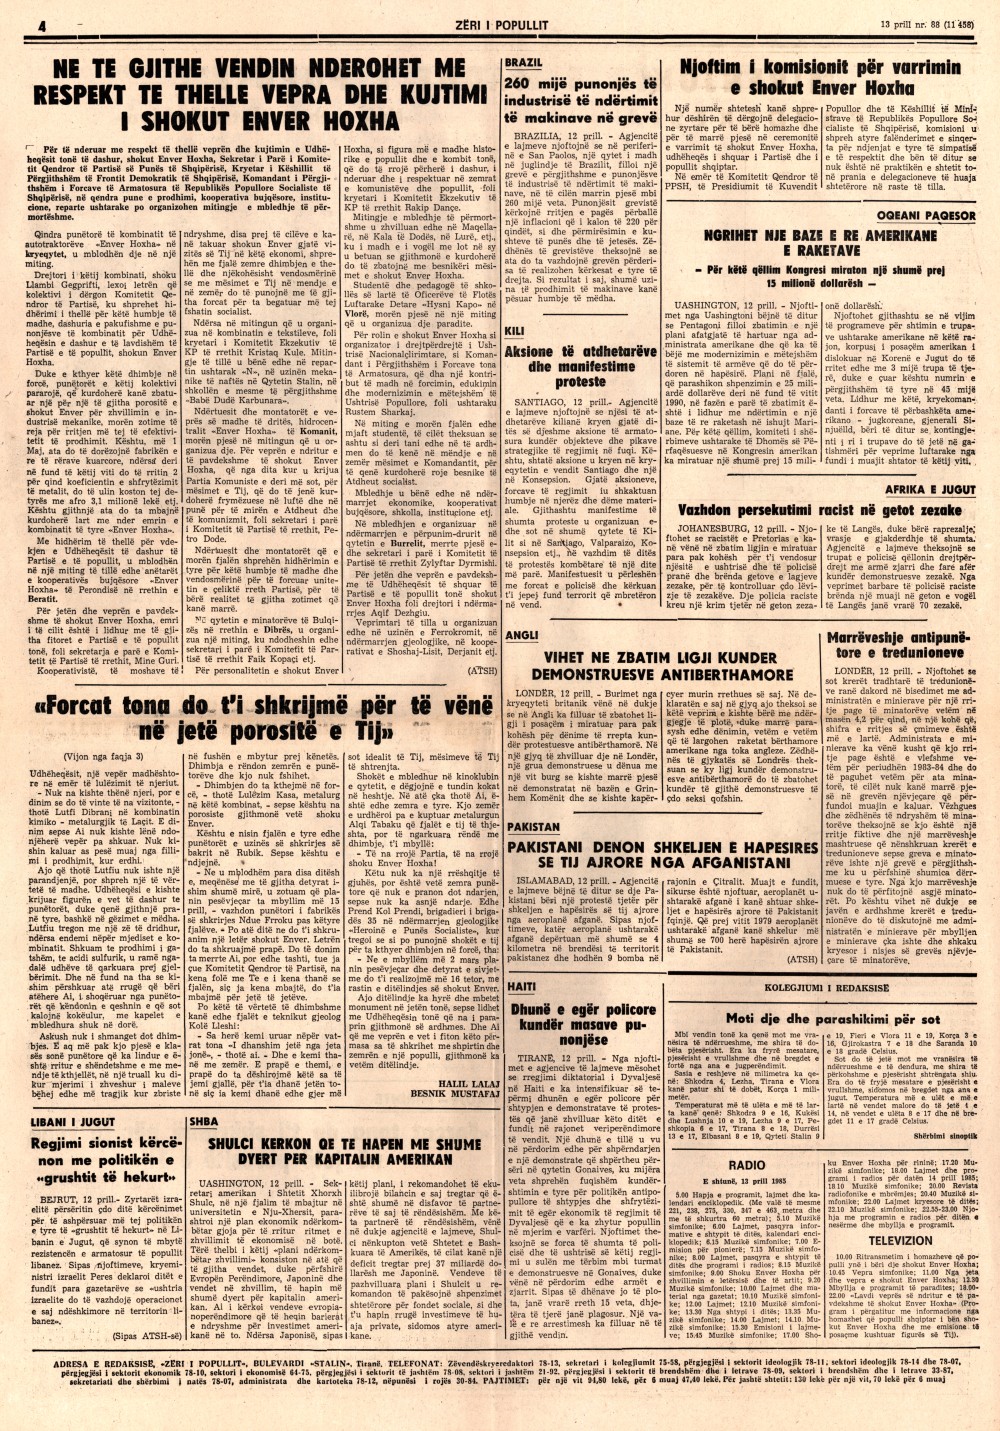 Газета "Зери и популлит" от 13 апреля 1985 года (четвертая полоса)